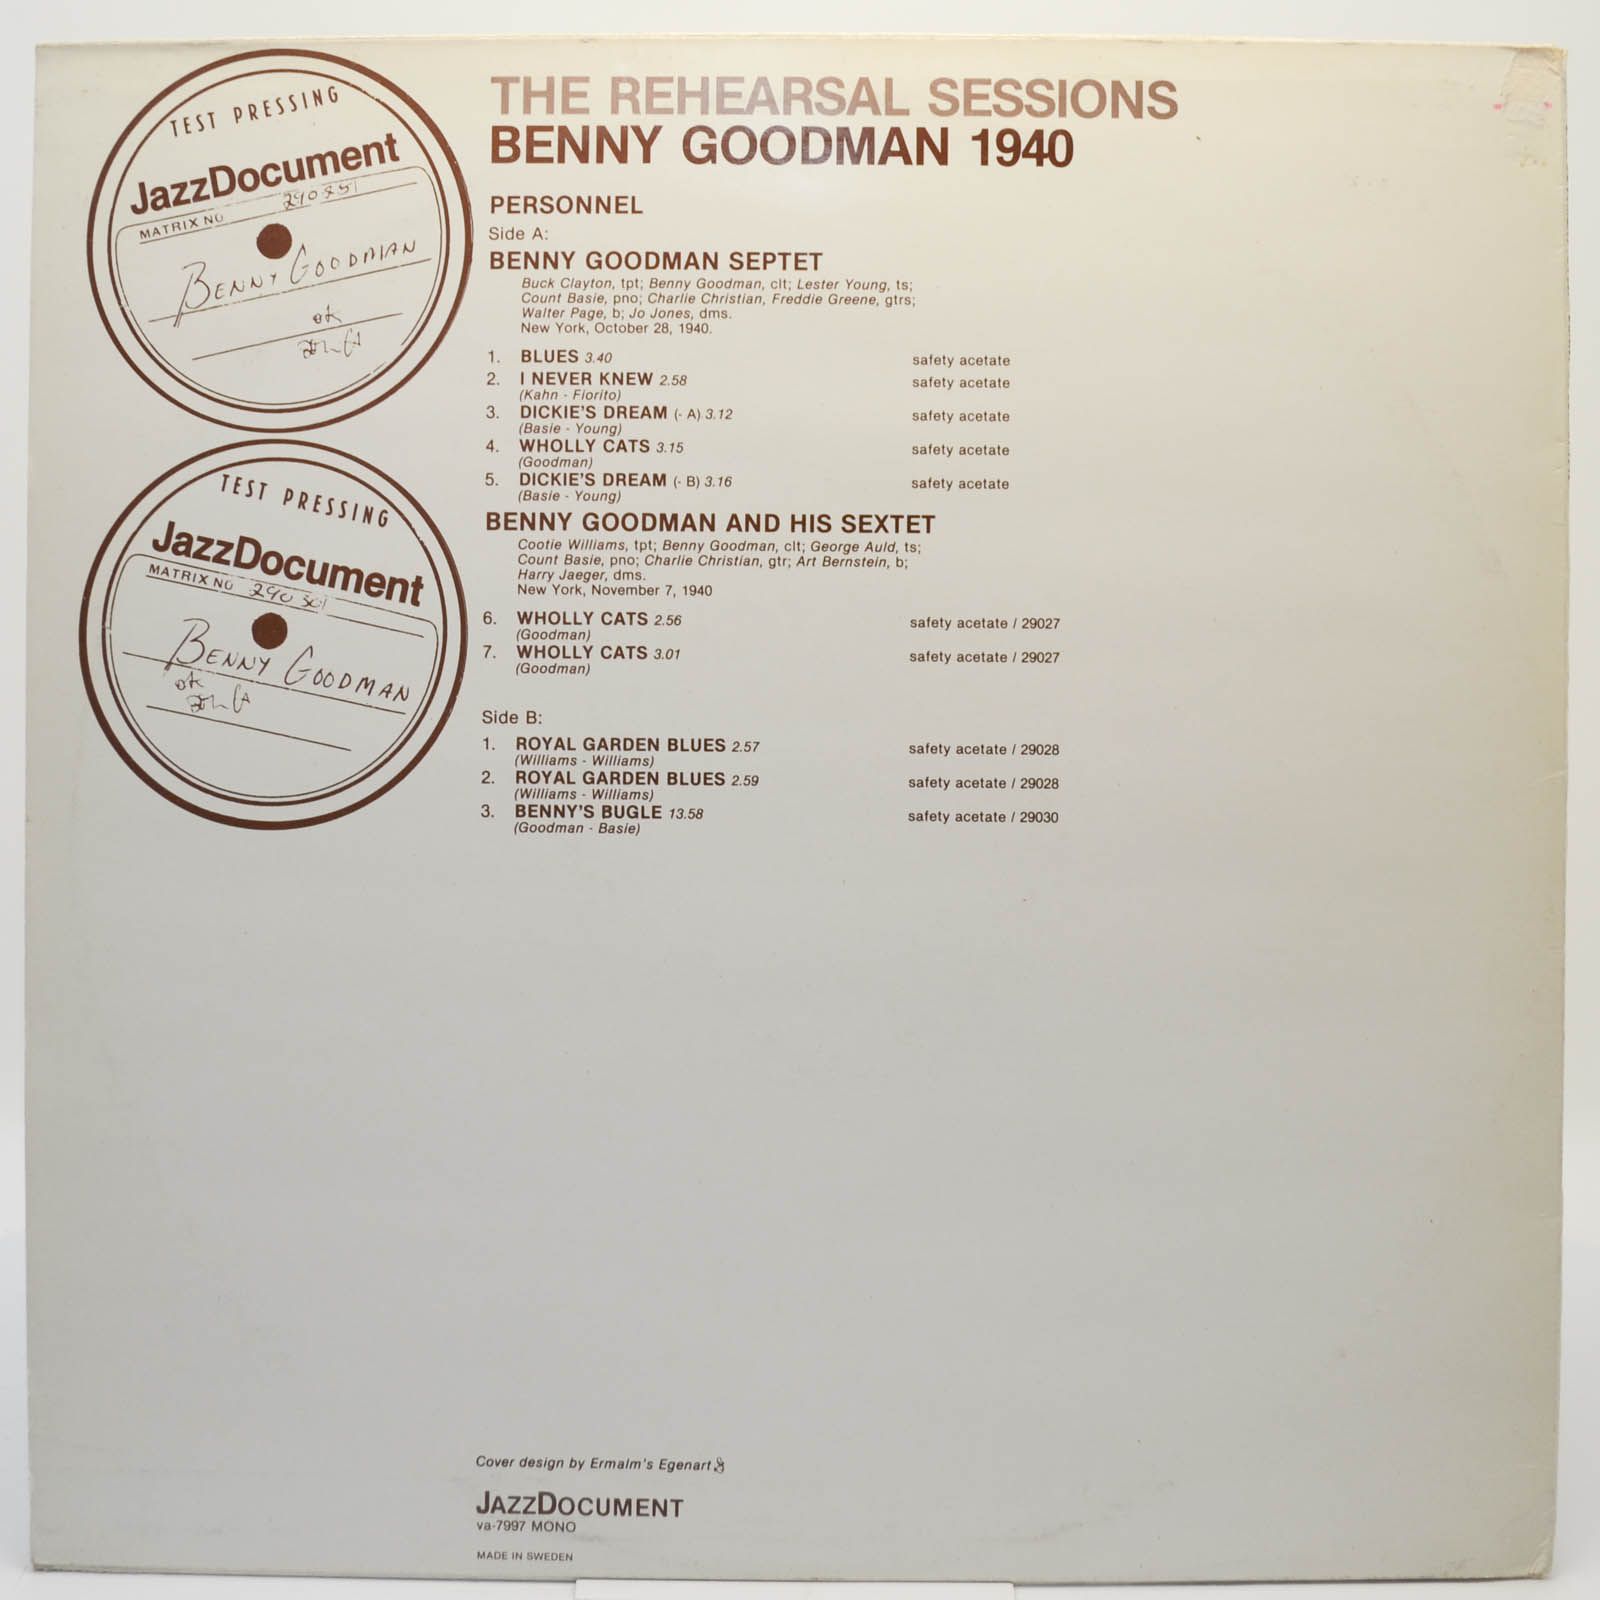 Benny Goodman — The Rehearsal Sessions (Benny Goodman 1940), 1980